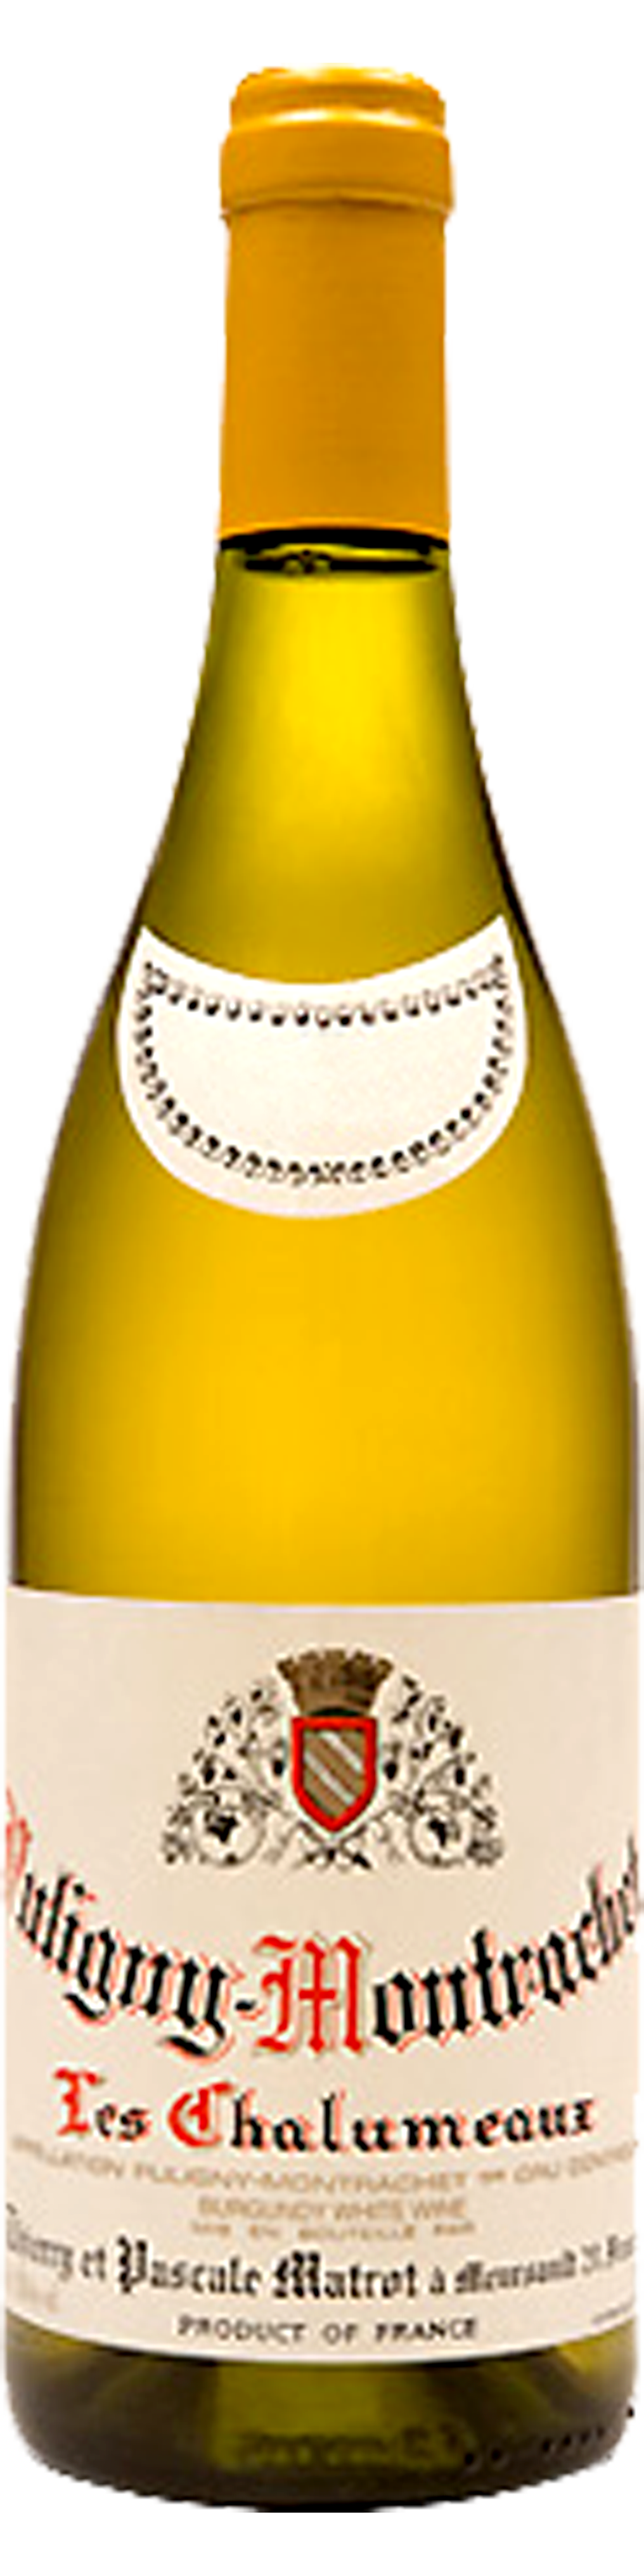 Bottle shot of 2011 Puligny Montrachet 1er Cru Les Chalumeux